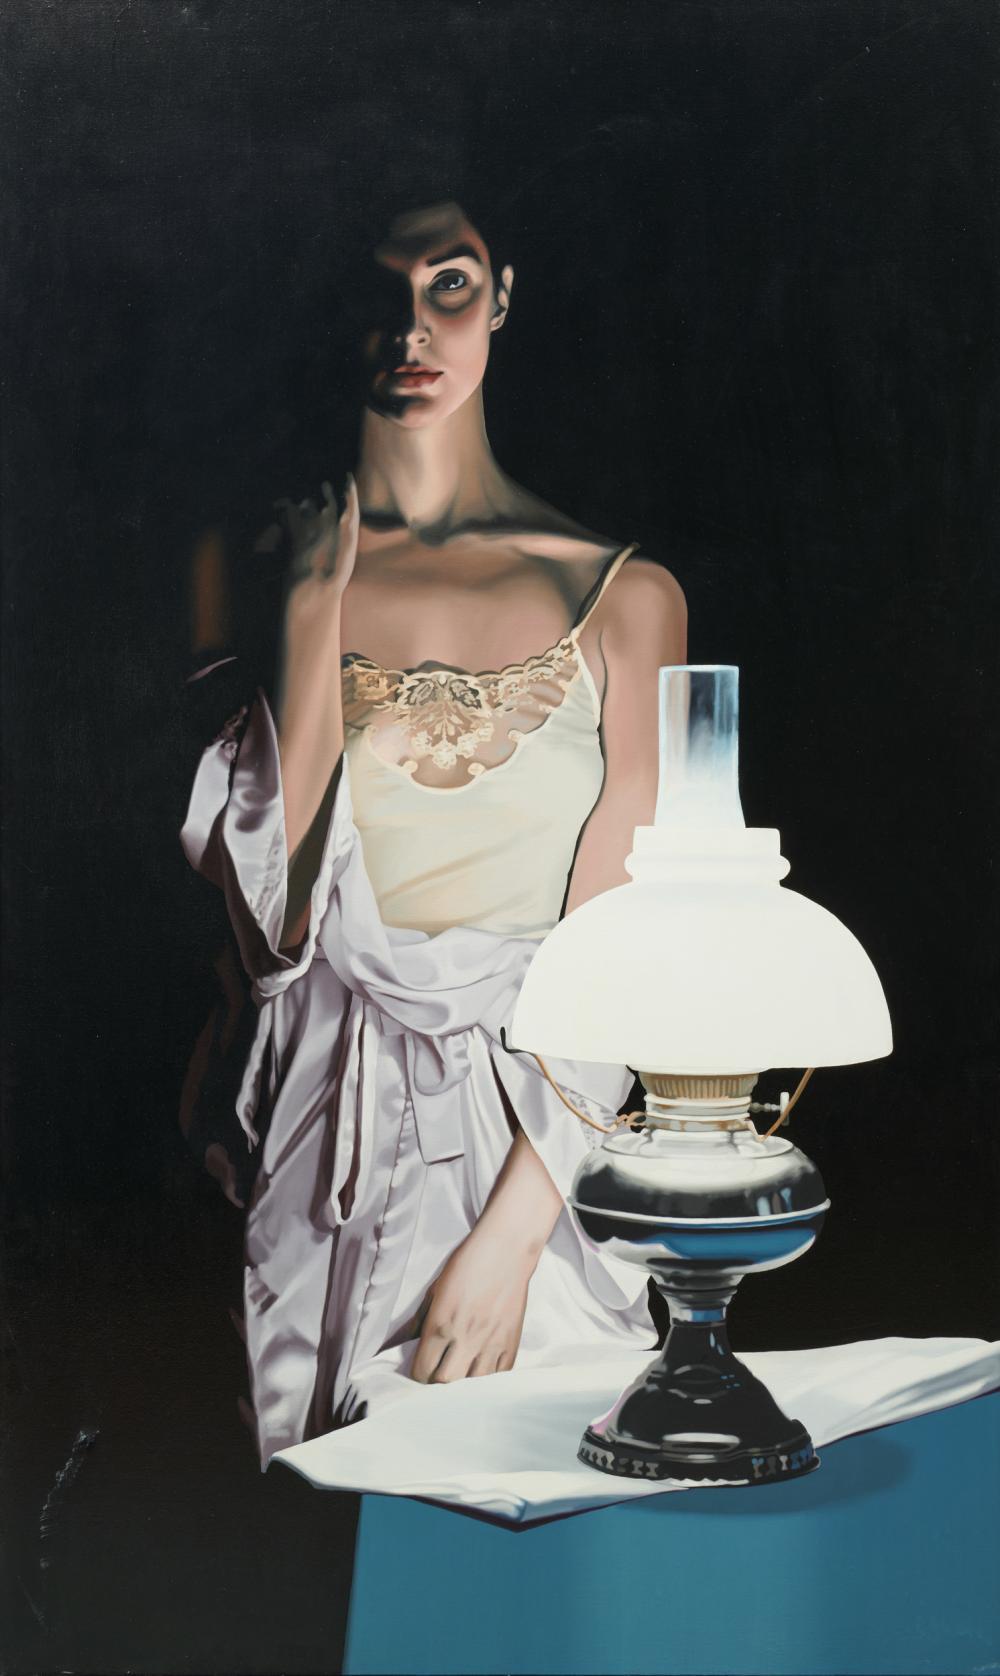 Steve Smulka Figurative Painting - LAMP BLACK - Portrait / Dark colors / Female Figure / Photorealism / Blue / Lamp